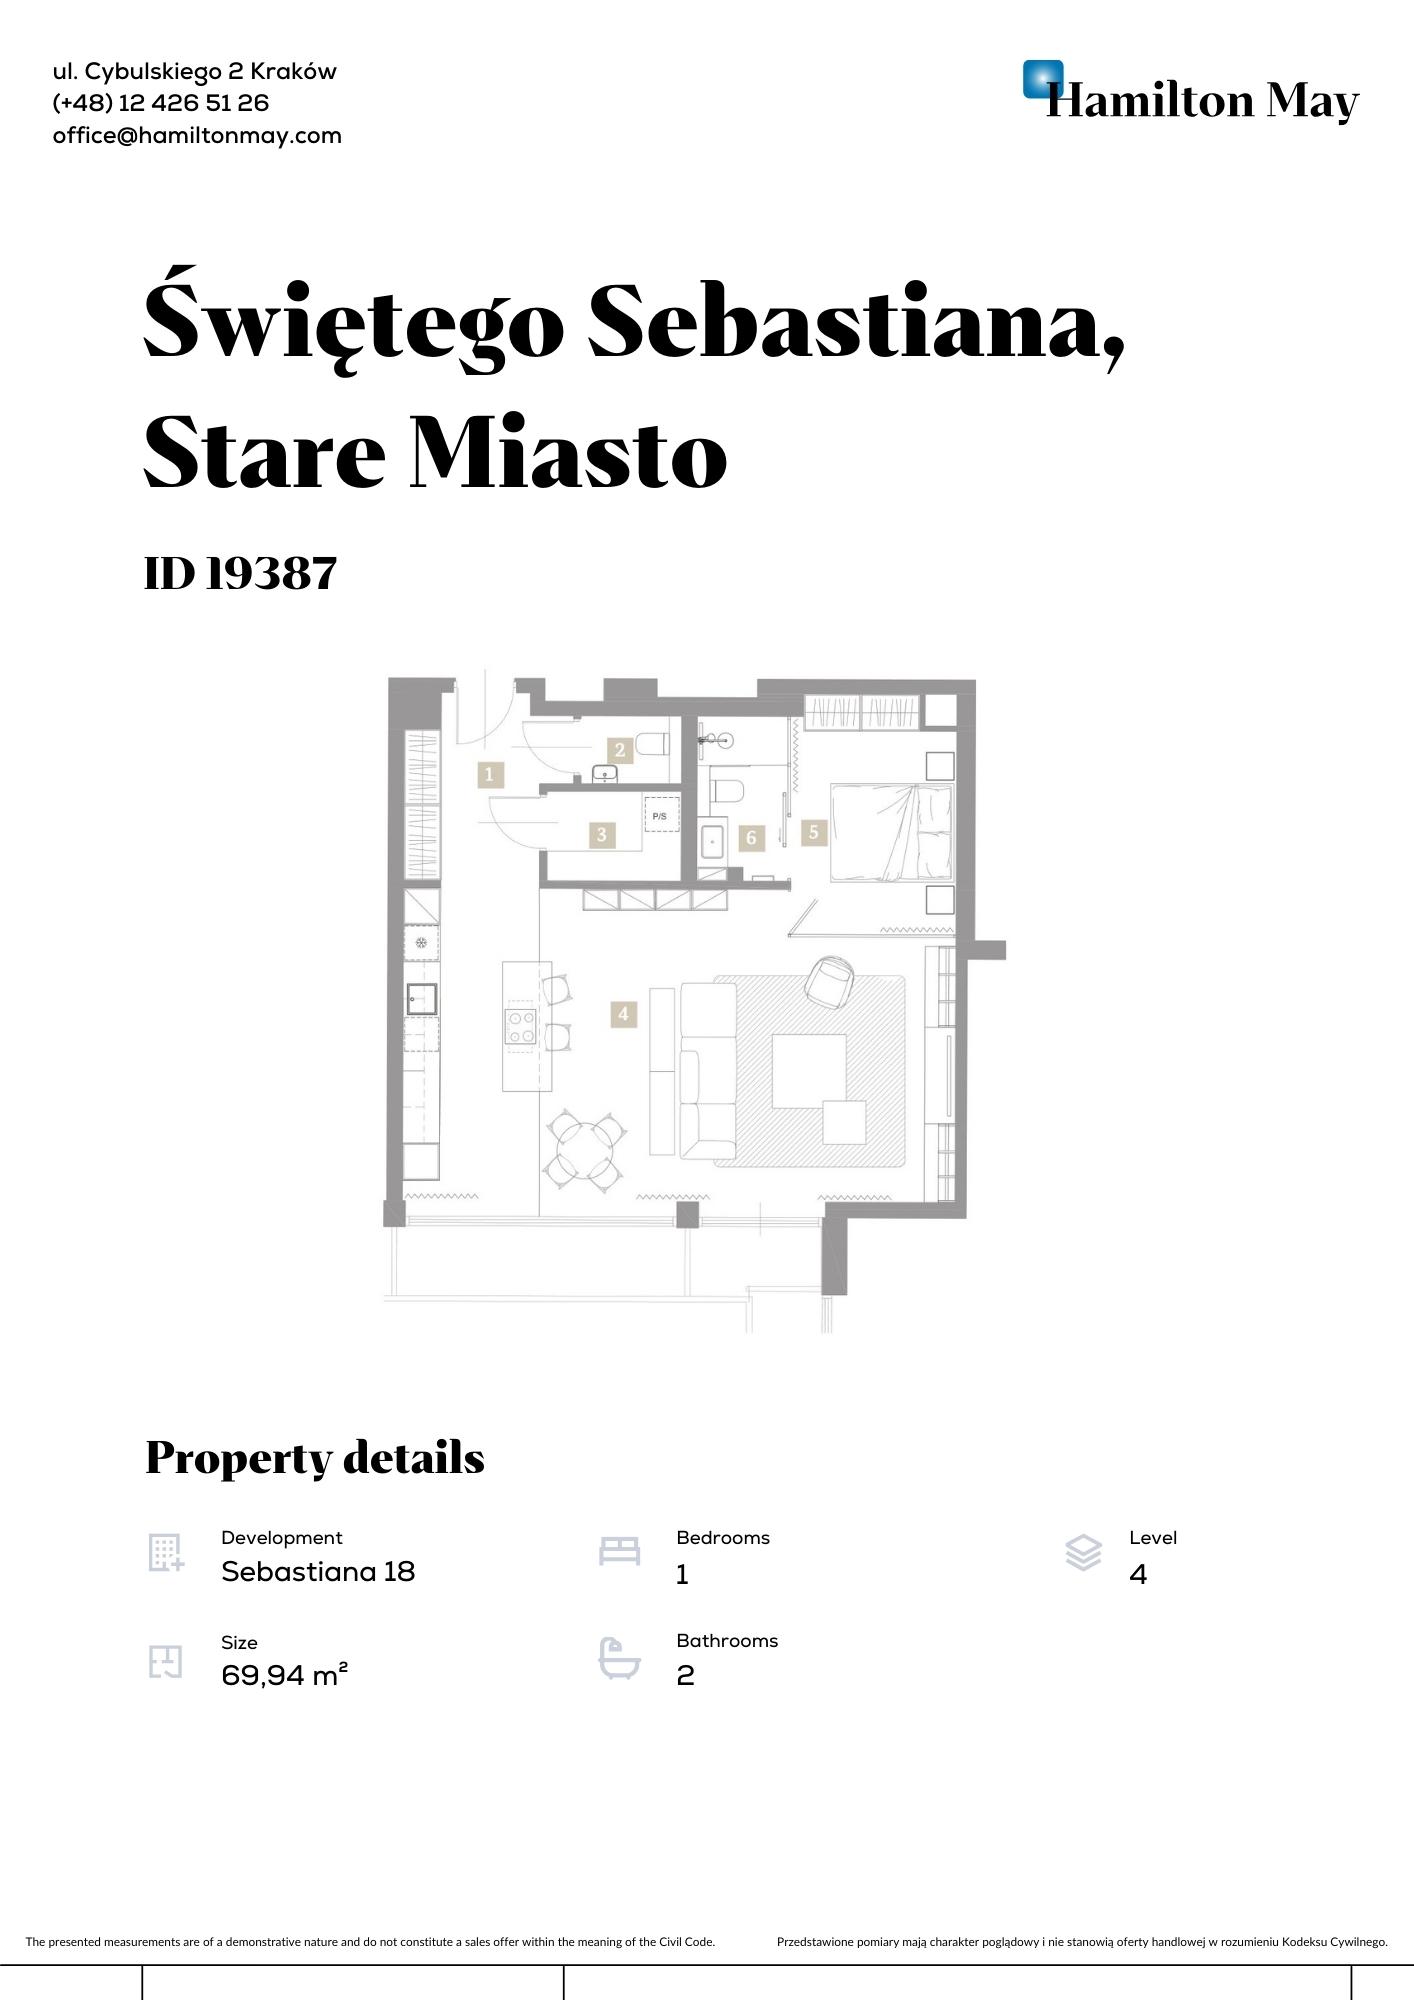 Apartment in a prestigious investment at Św. Sebastiana 18 - plan